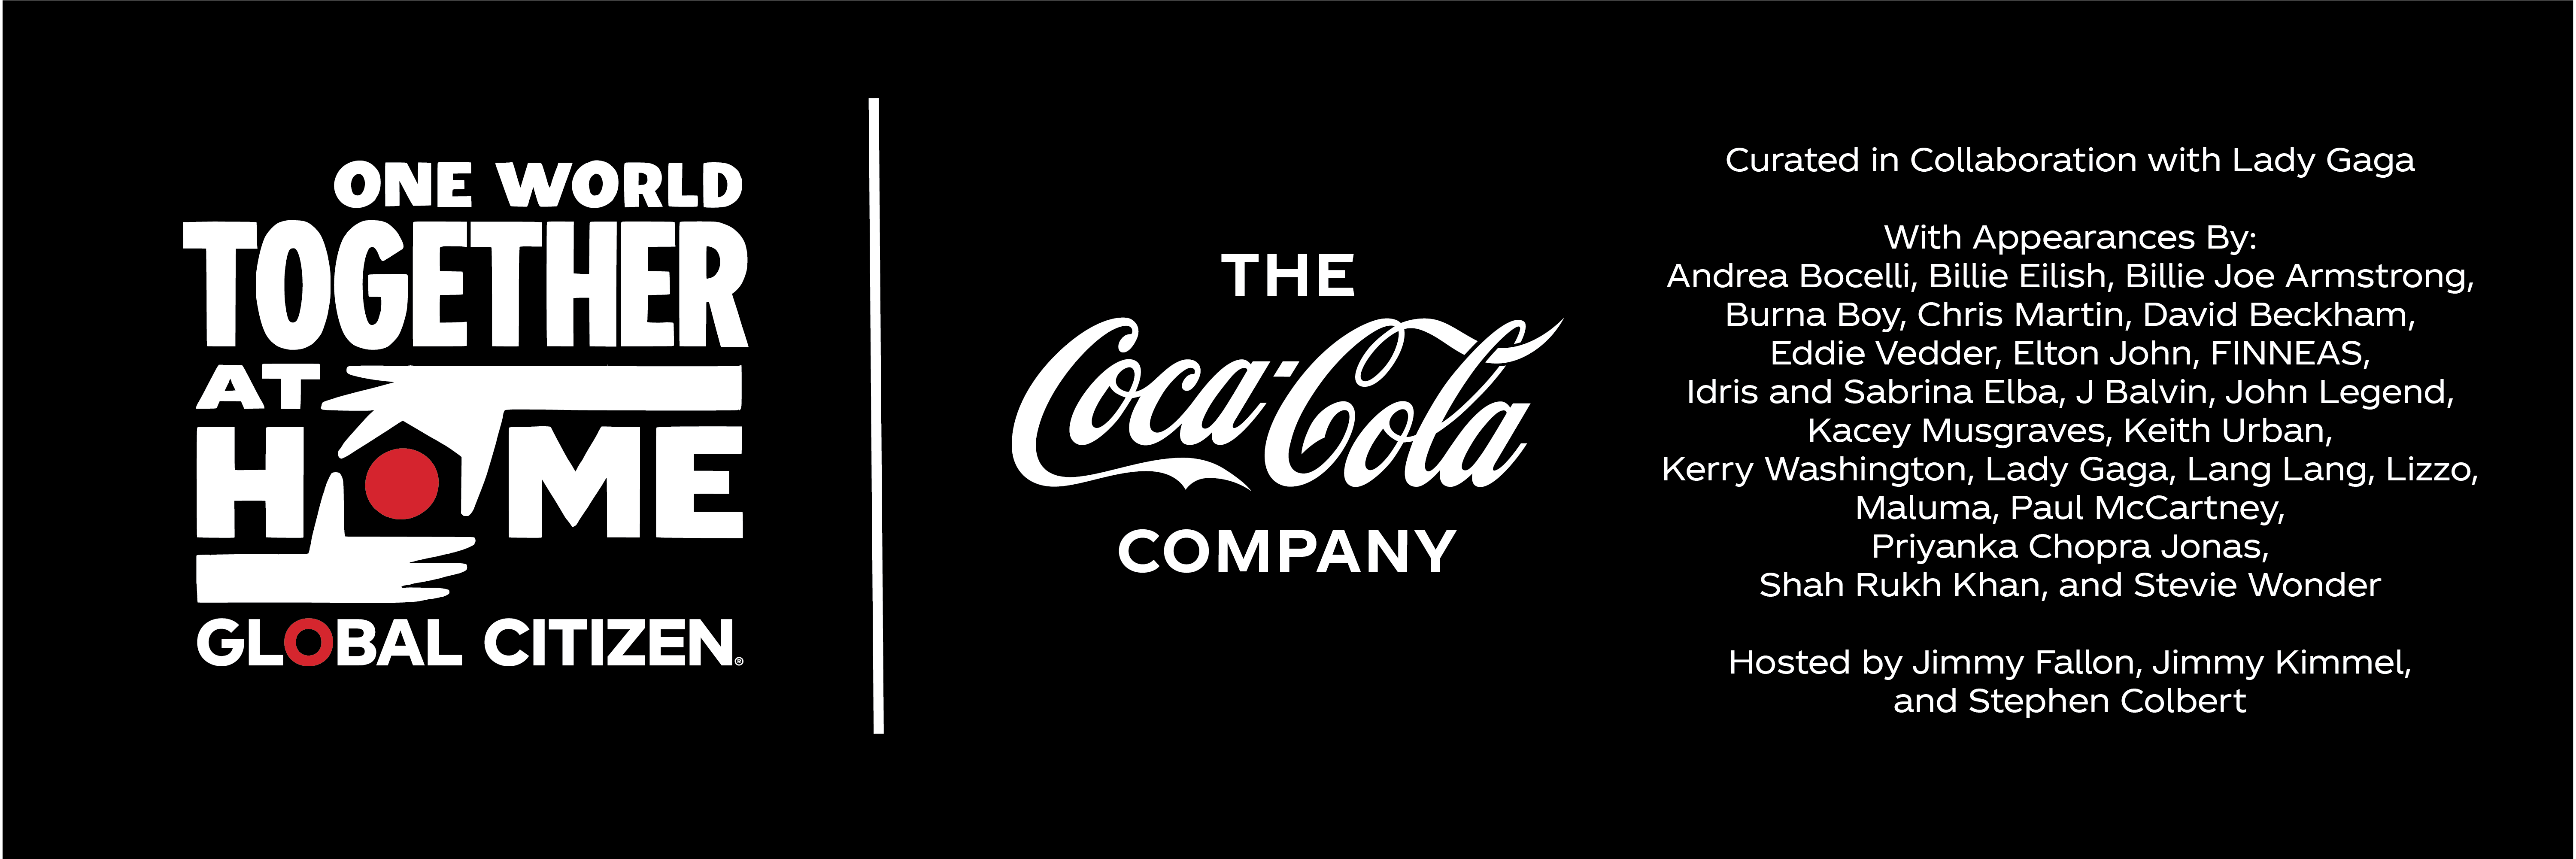 Together at home coca-cola logo